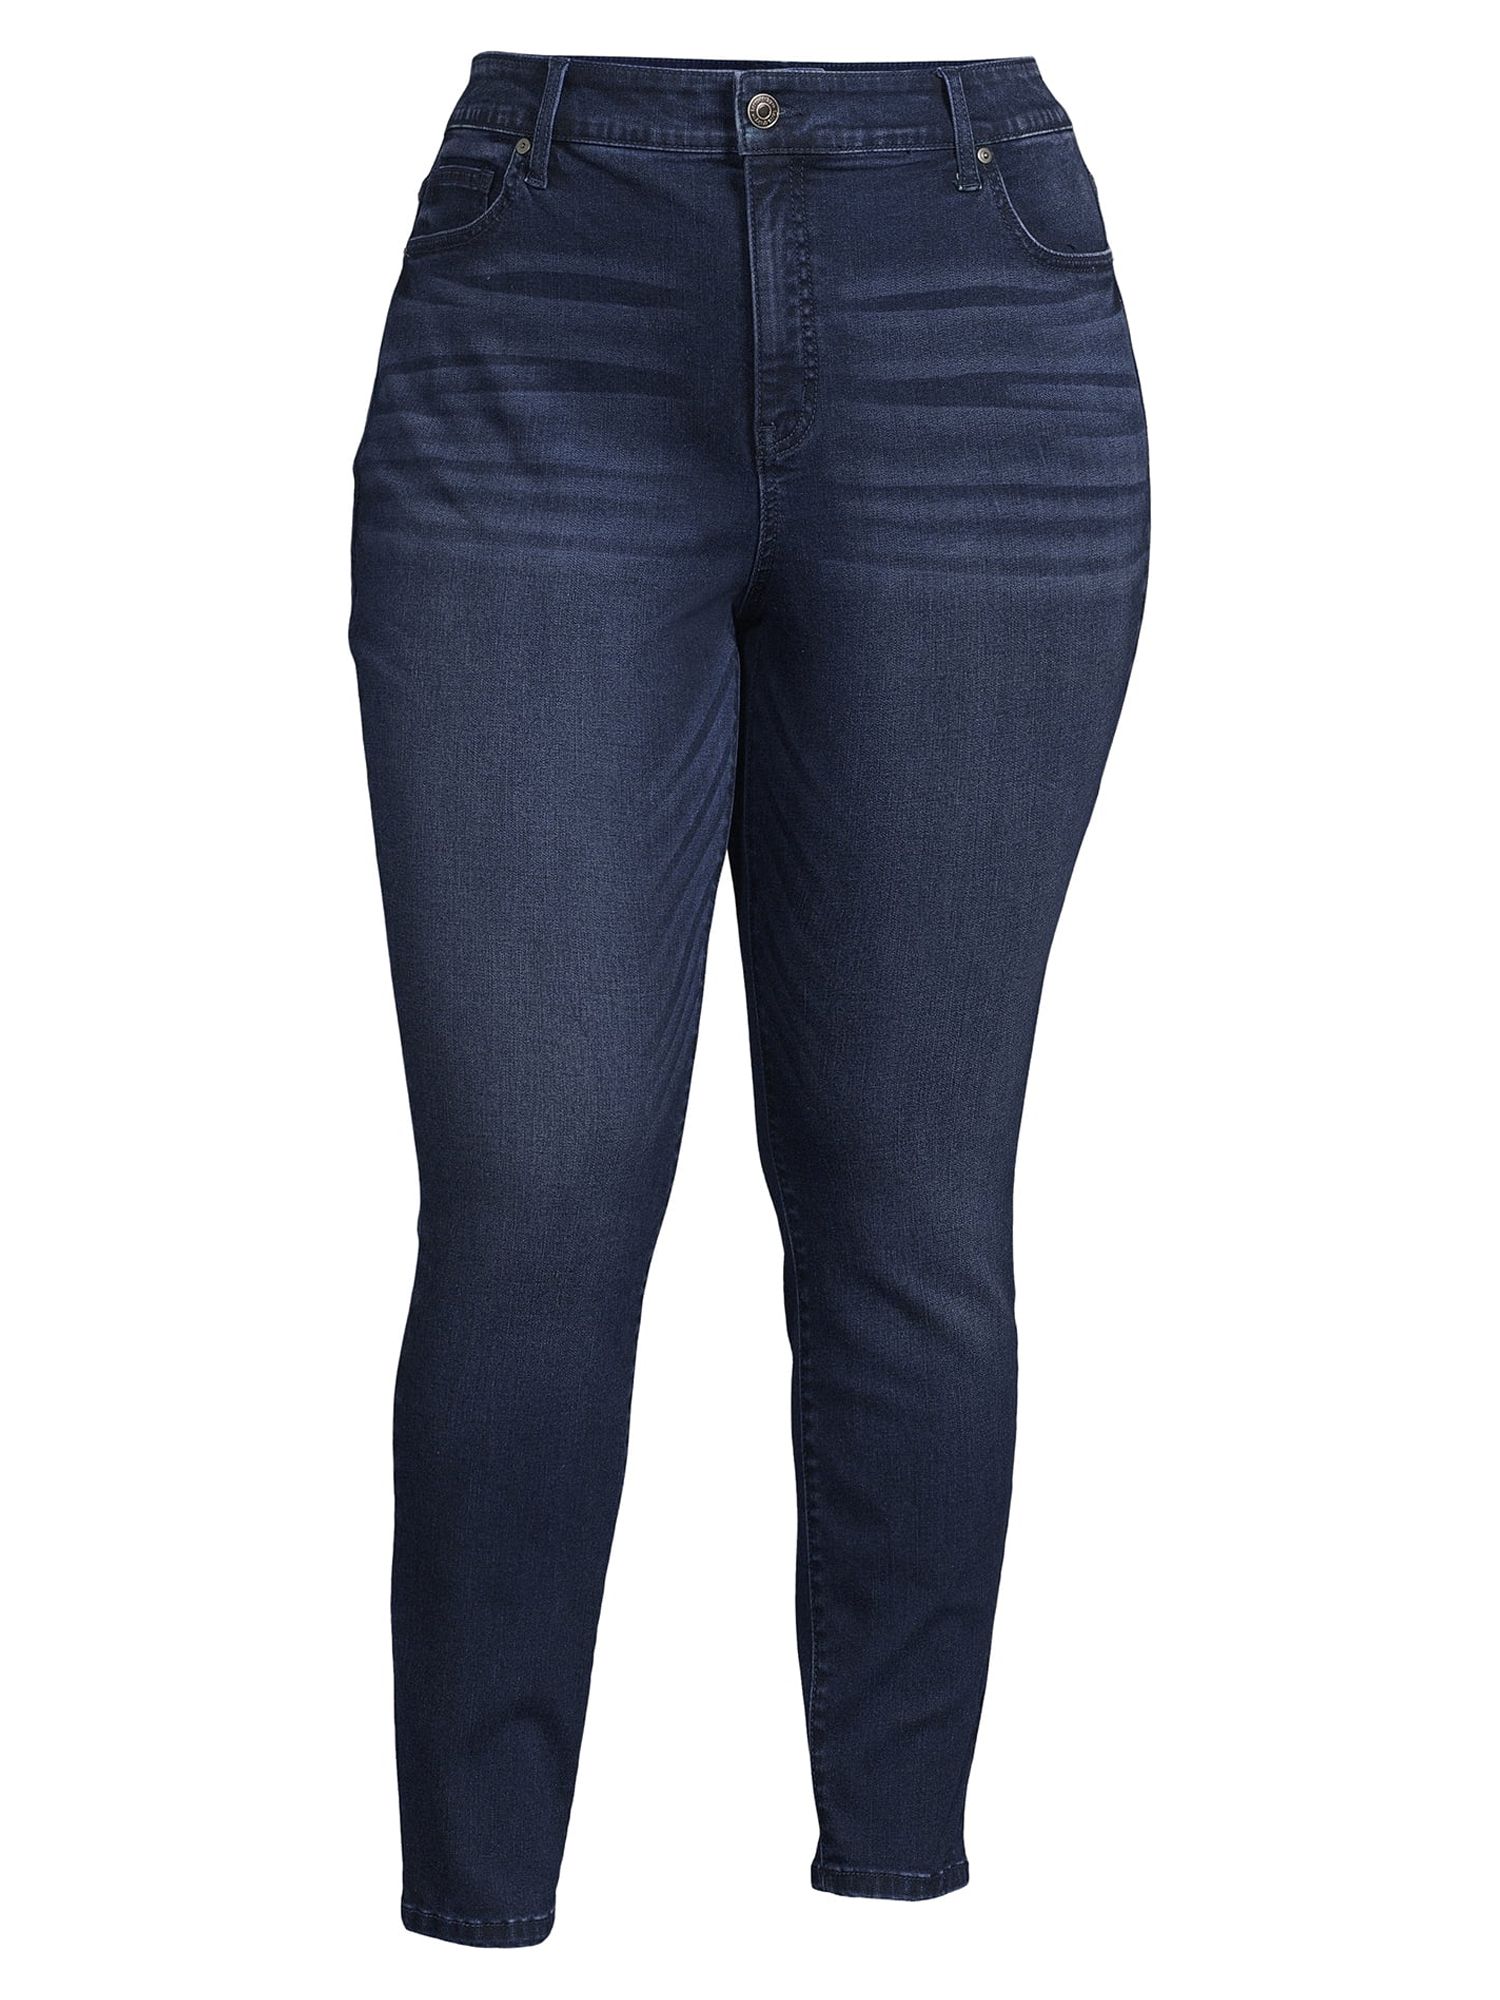 Terra & Sky Women's Plus Size Skinny Jeans, 29” Inseam - image 2 of 11